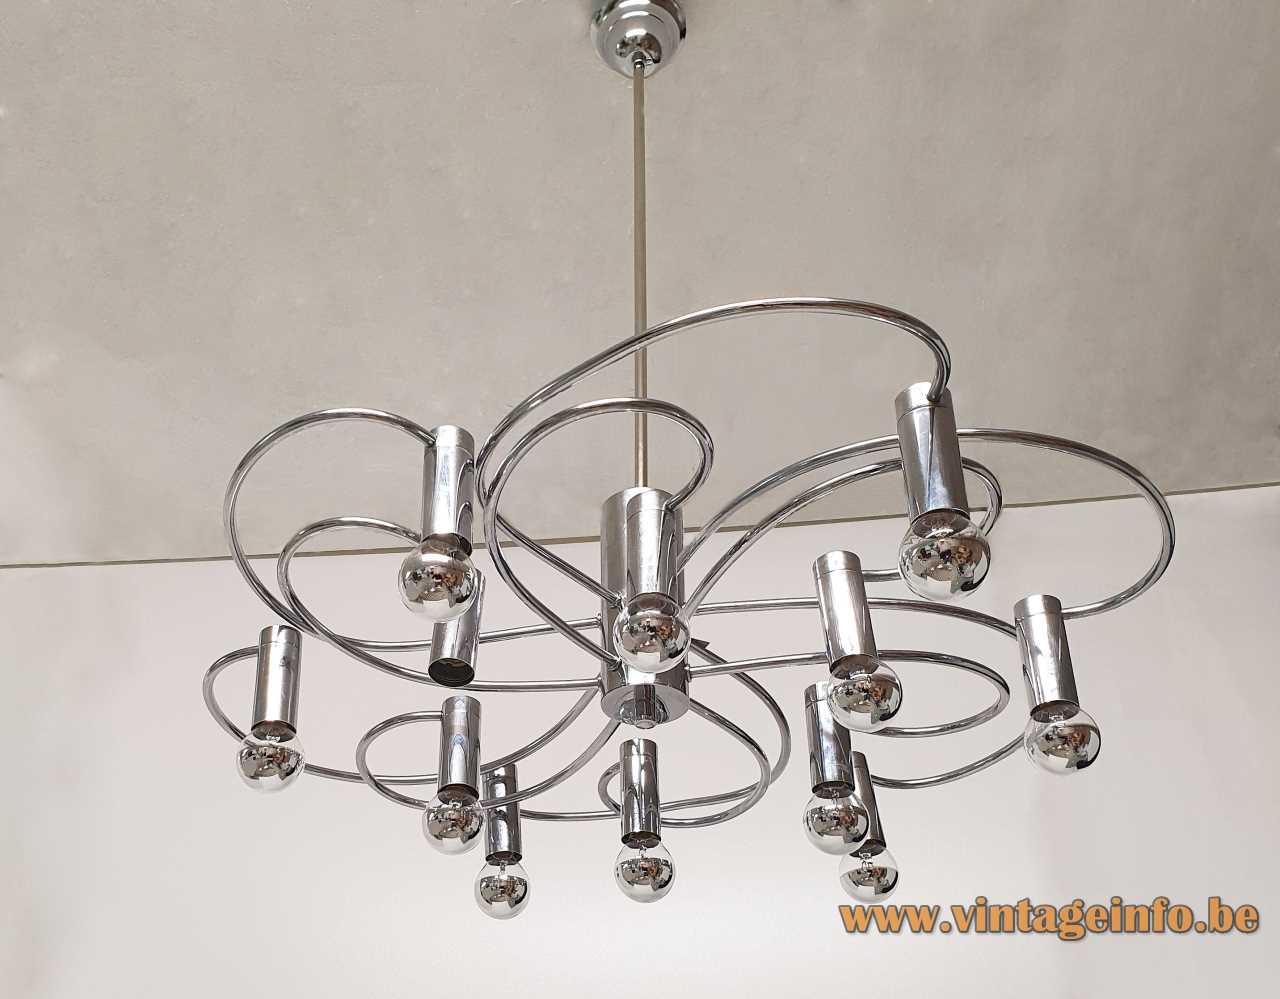 1970s chrome Cosack chandelier curved rods & tubes 12 light bulbs Neheim-Hüsten Germany Gecos